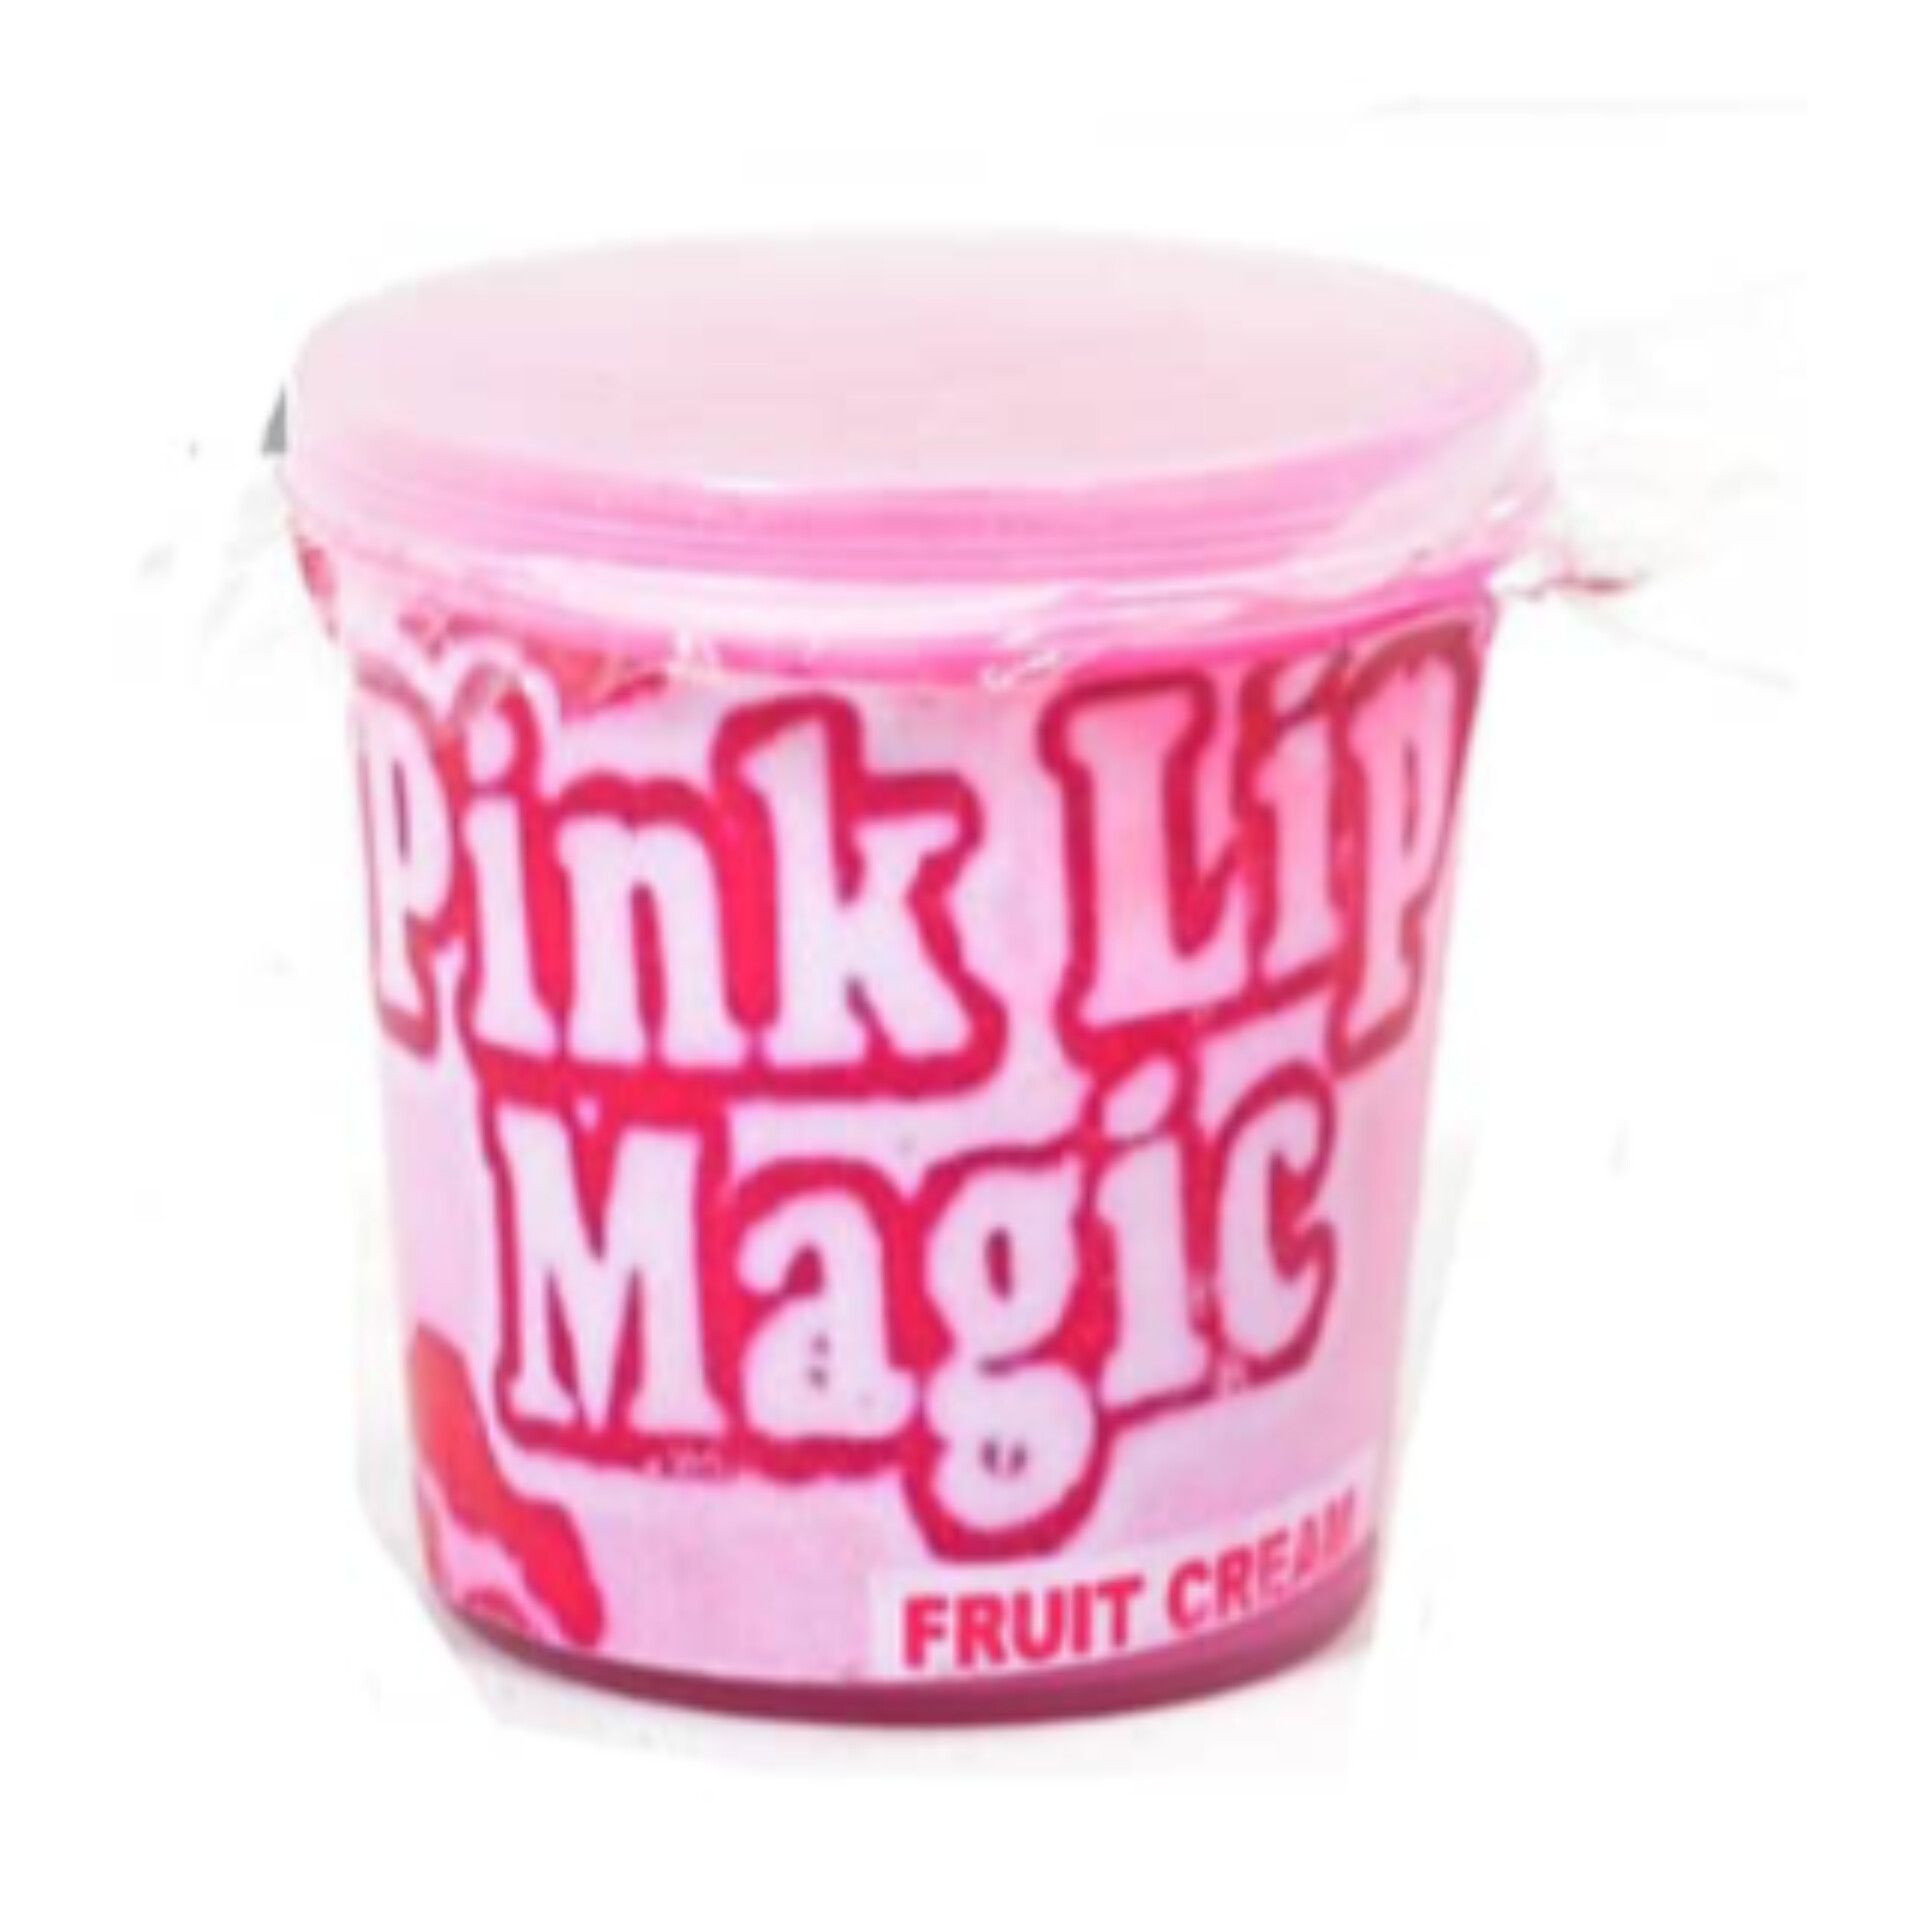 Pink lips magic cream, Apapa, Lagos, Health and Wellness